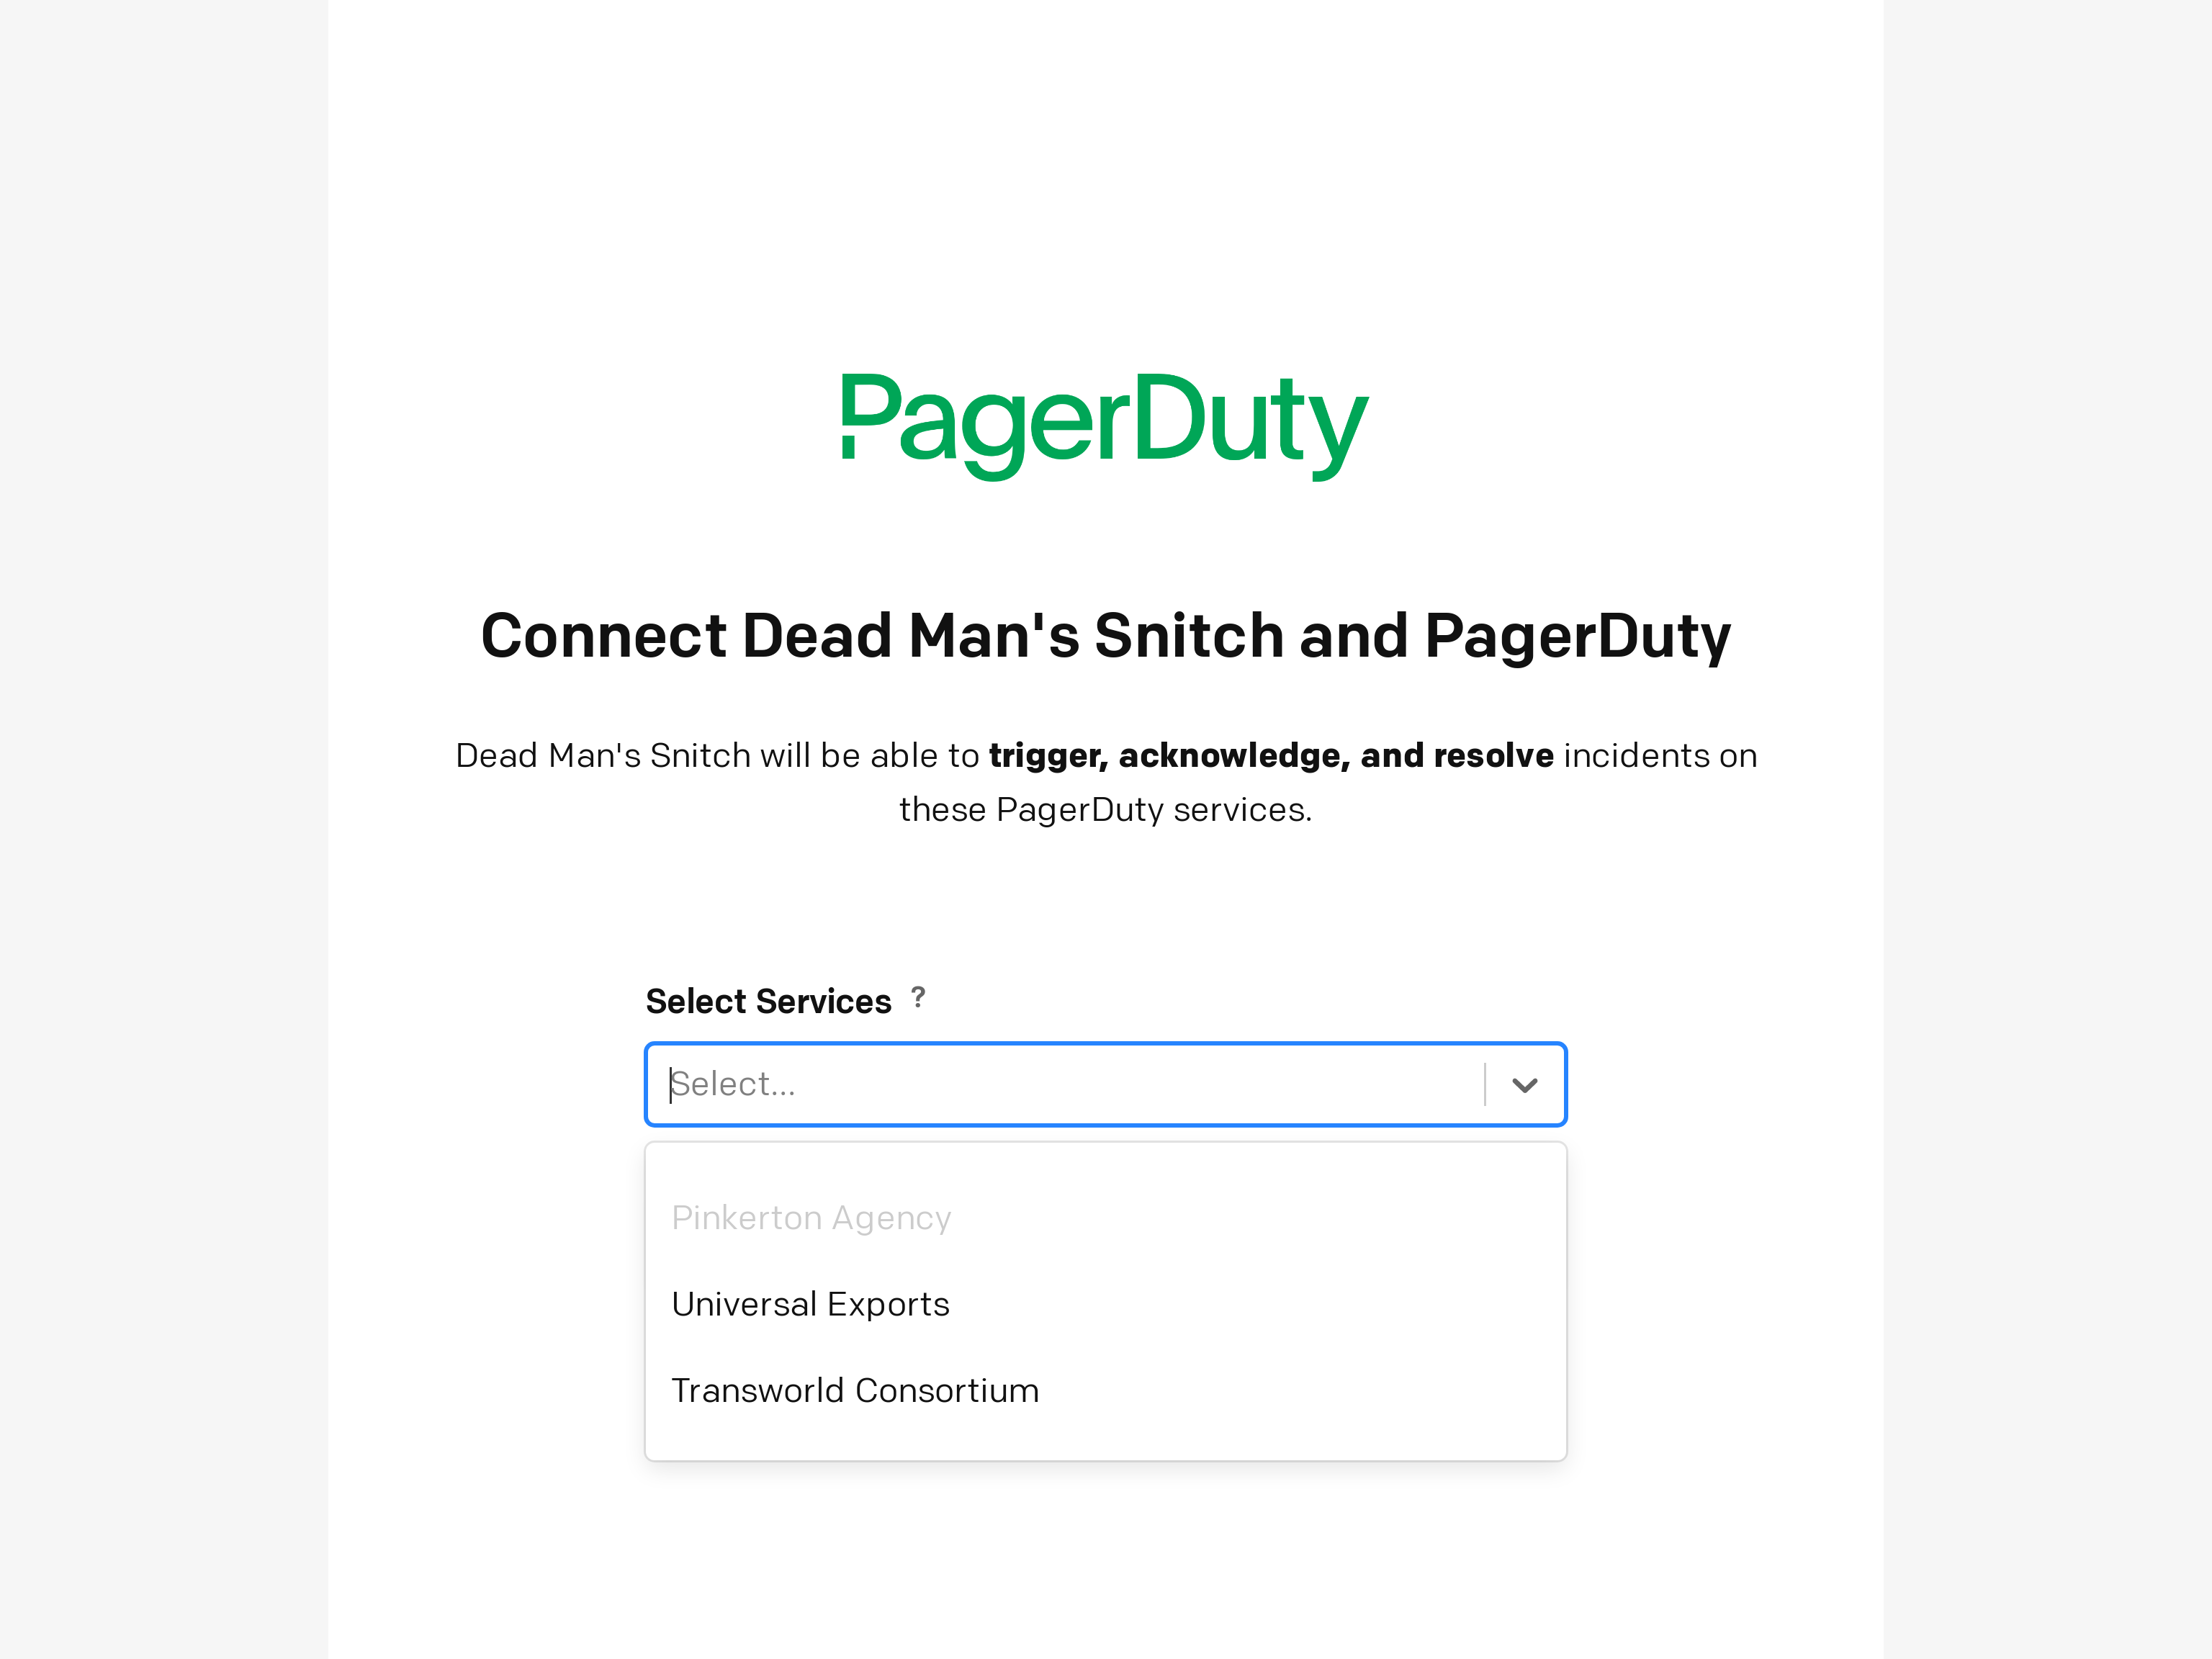 Screenshot of PagerDuty service selection